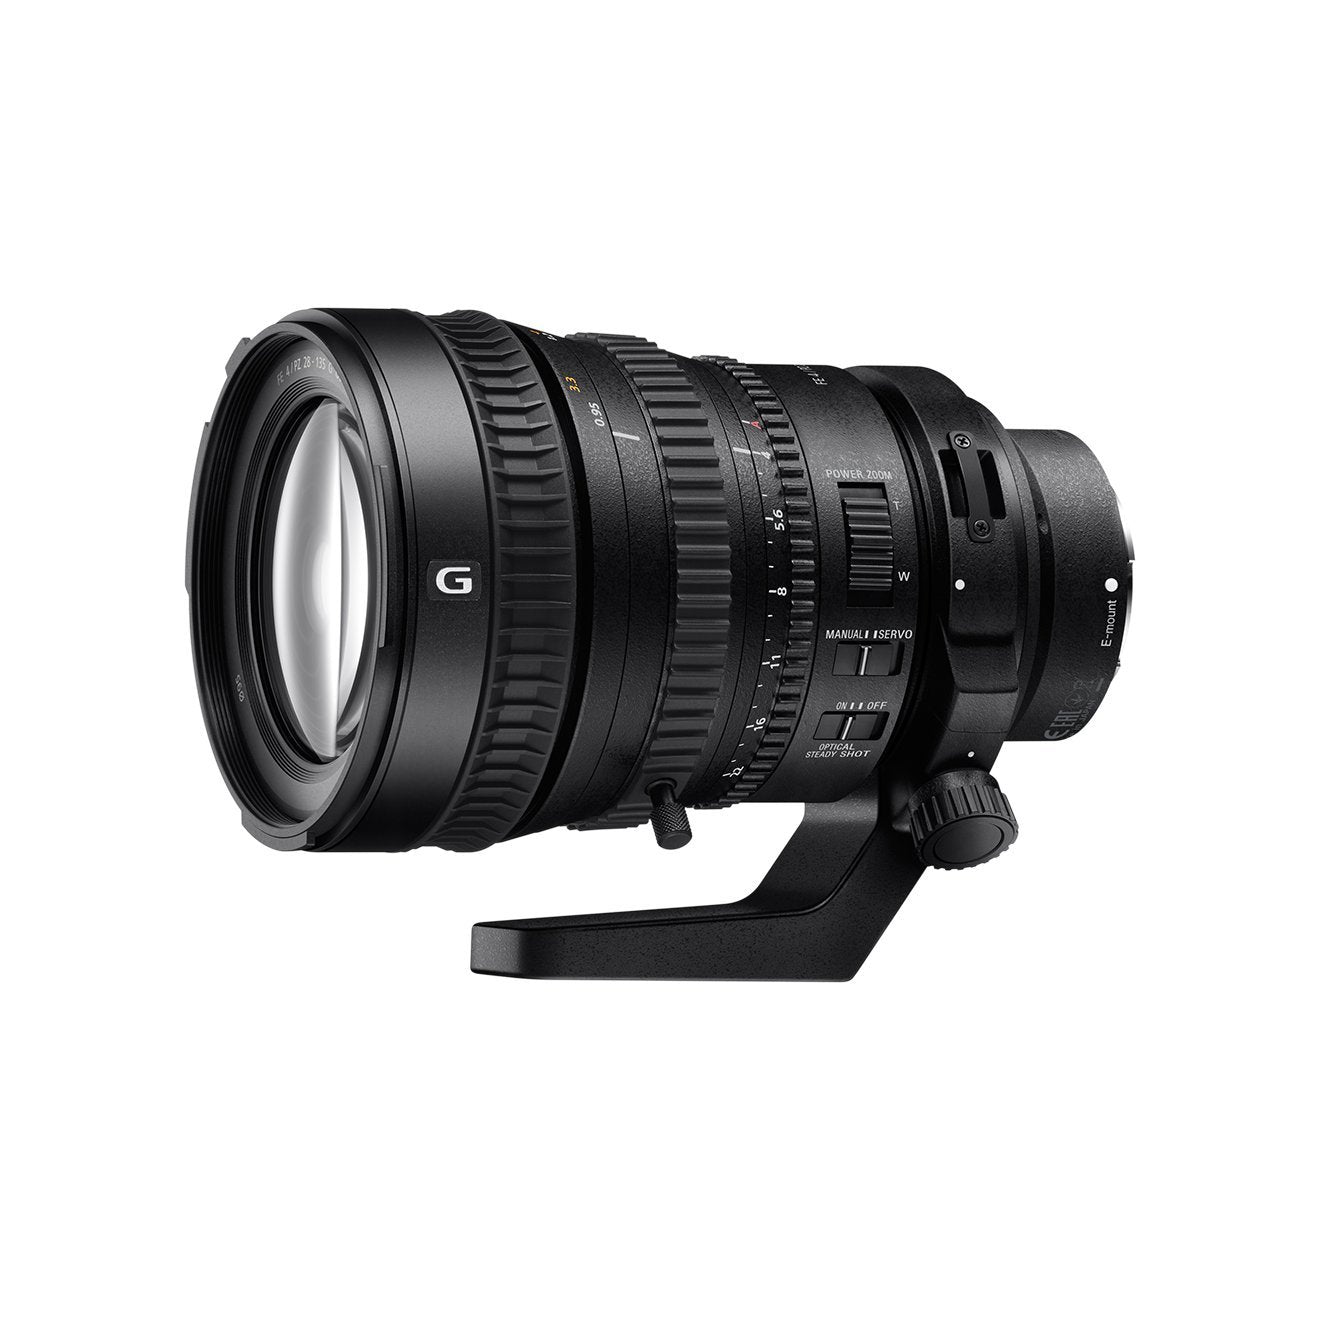 Sony SELP28135G 28-135mm FE PZ F4 G OSS Interchangeable Full-frame E-mount Power Zoom Lens - International Version (No Warranty)